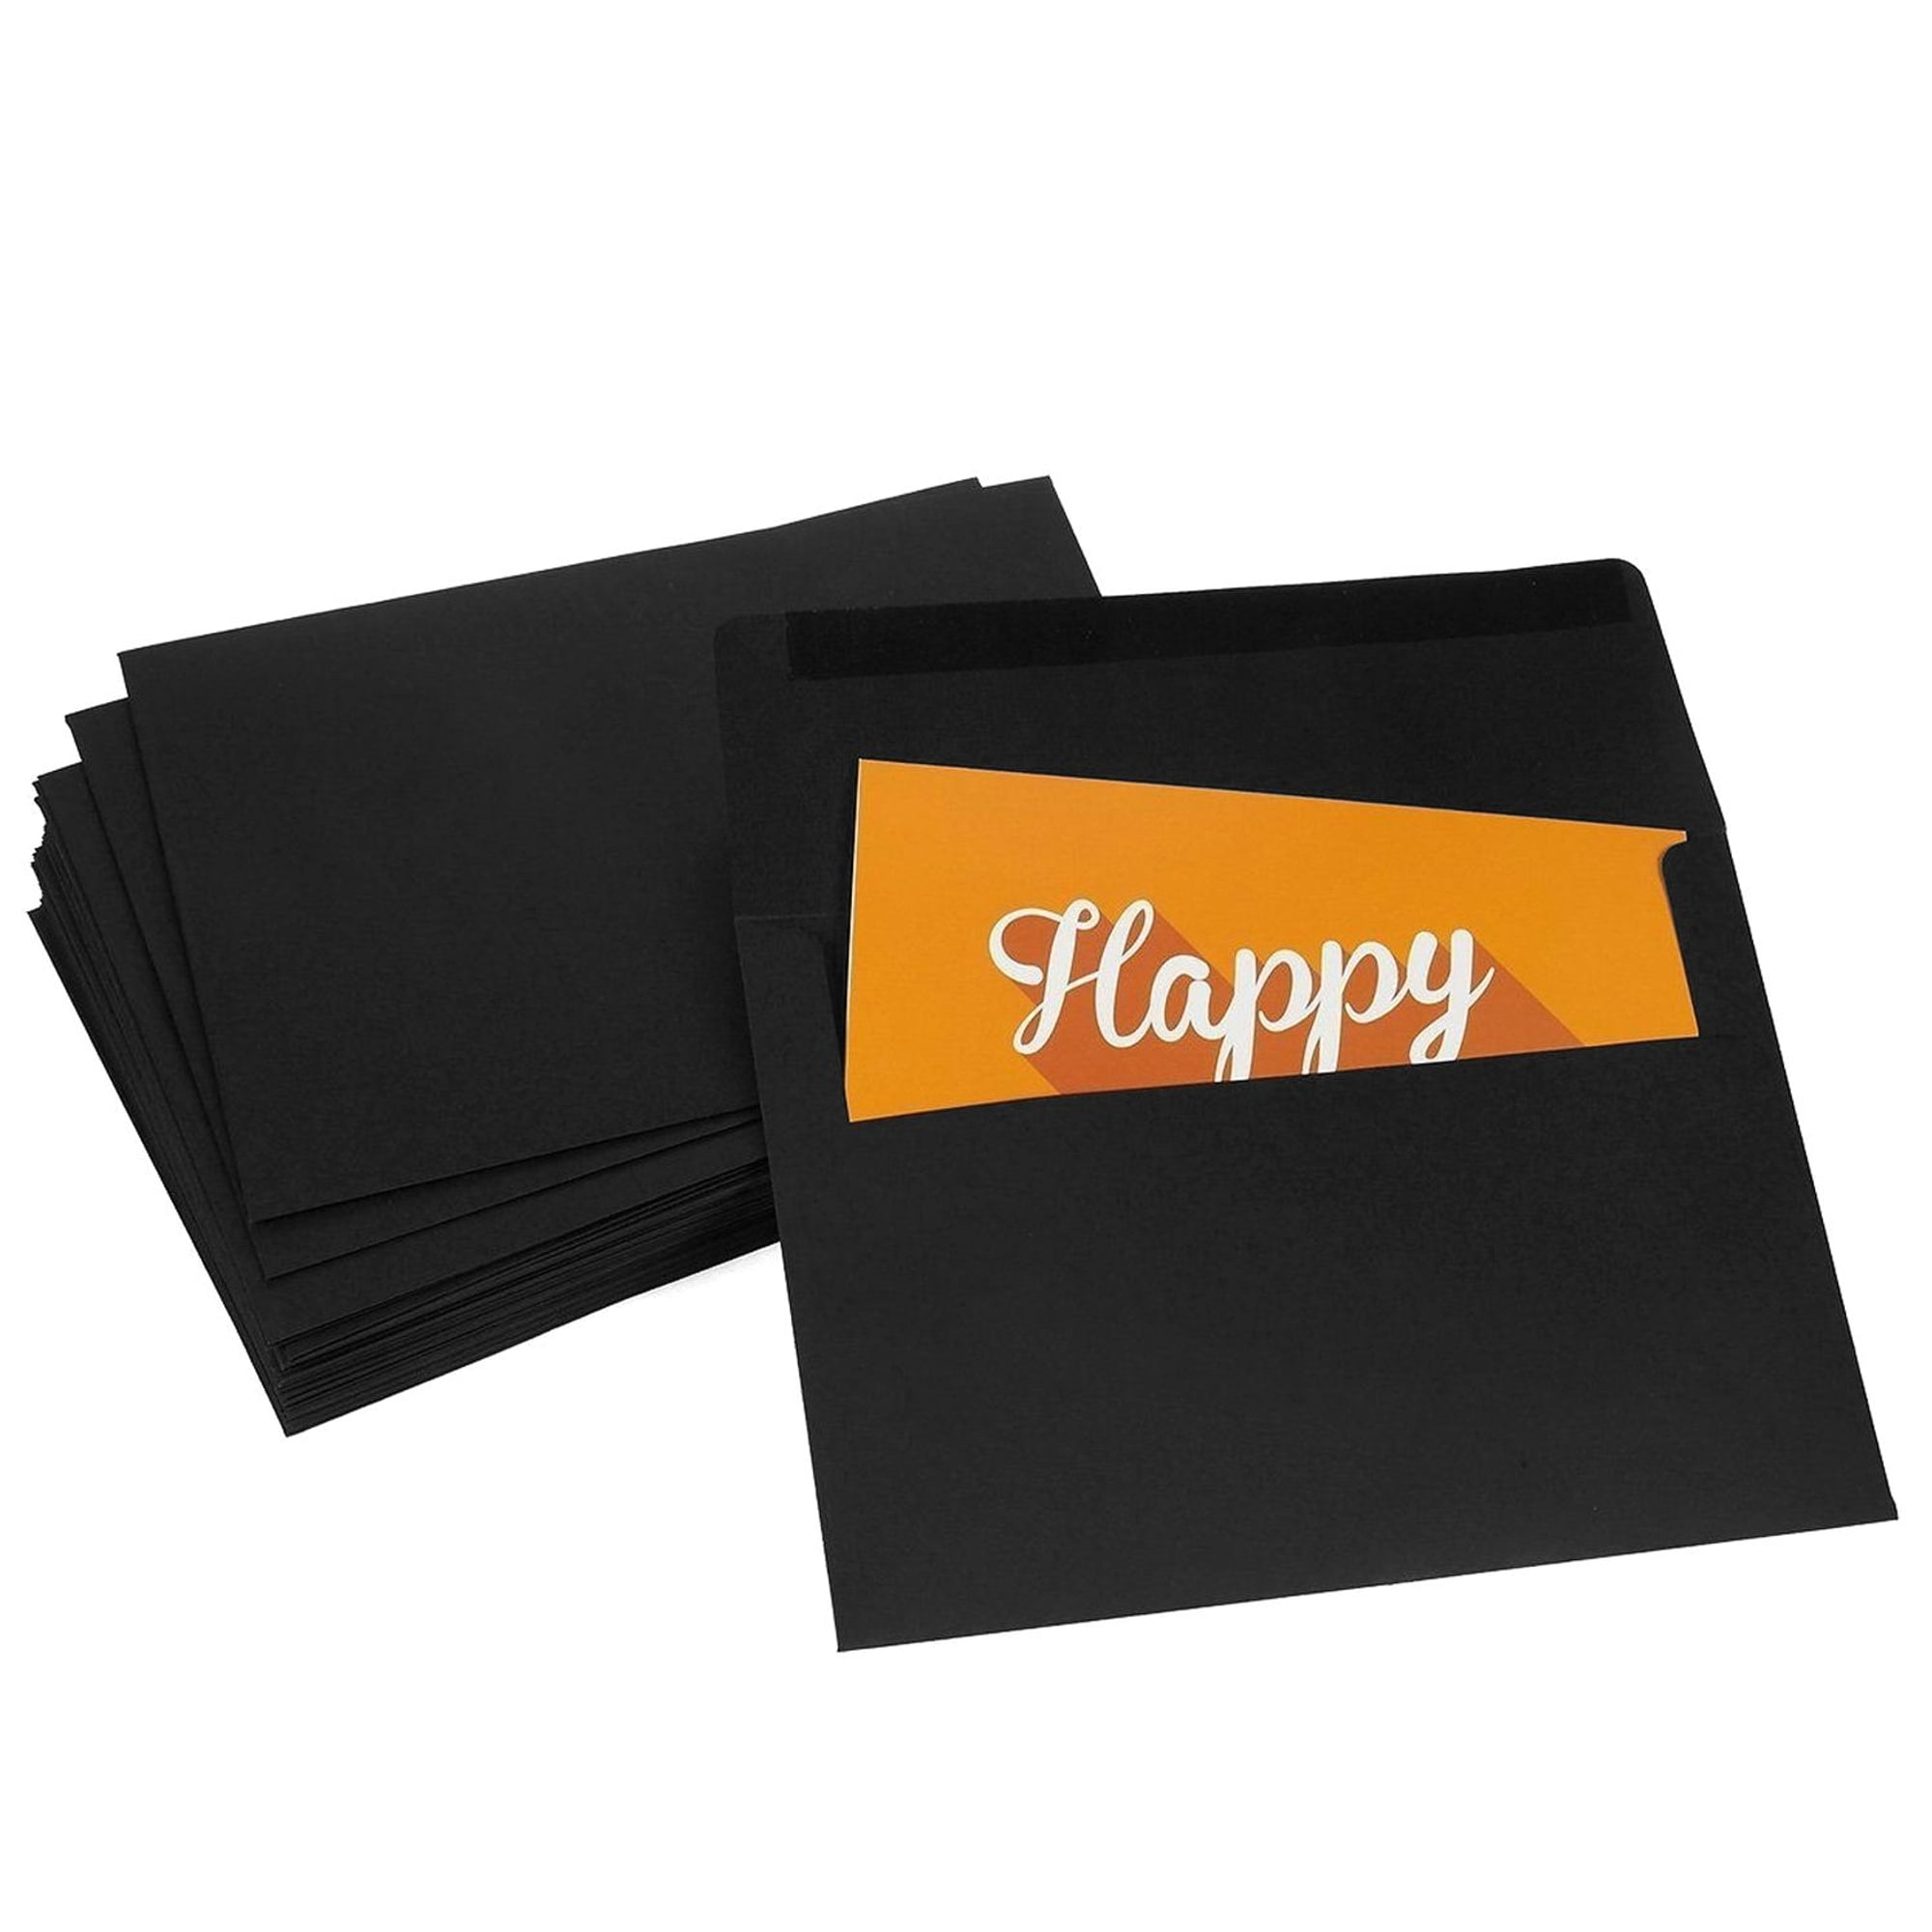  Keketer 5x7 Envelopes A7 Invitation Envelopes with Contour  Flap, Gummed Closure, Black, Pack of 100 : Office Products